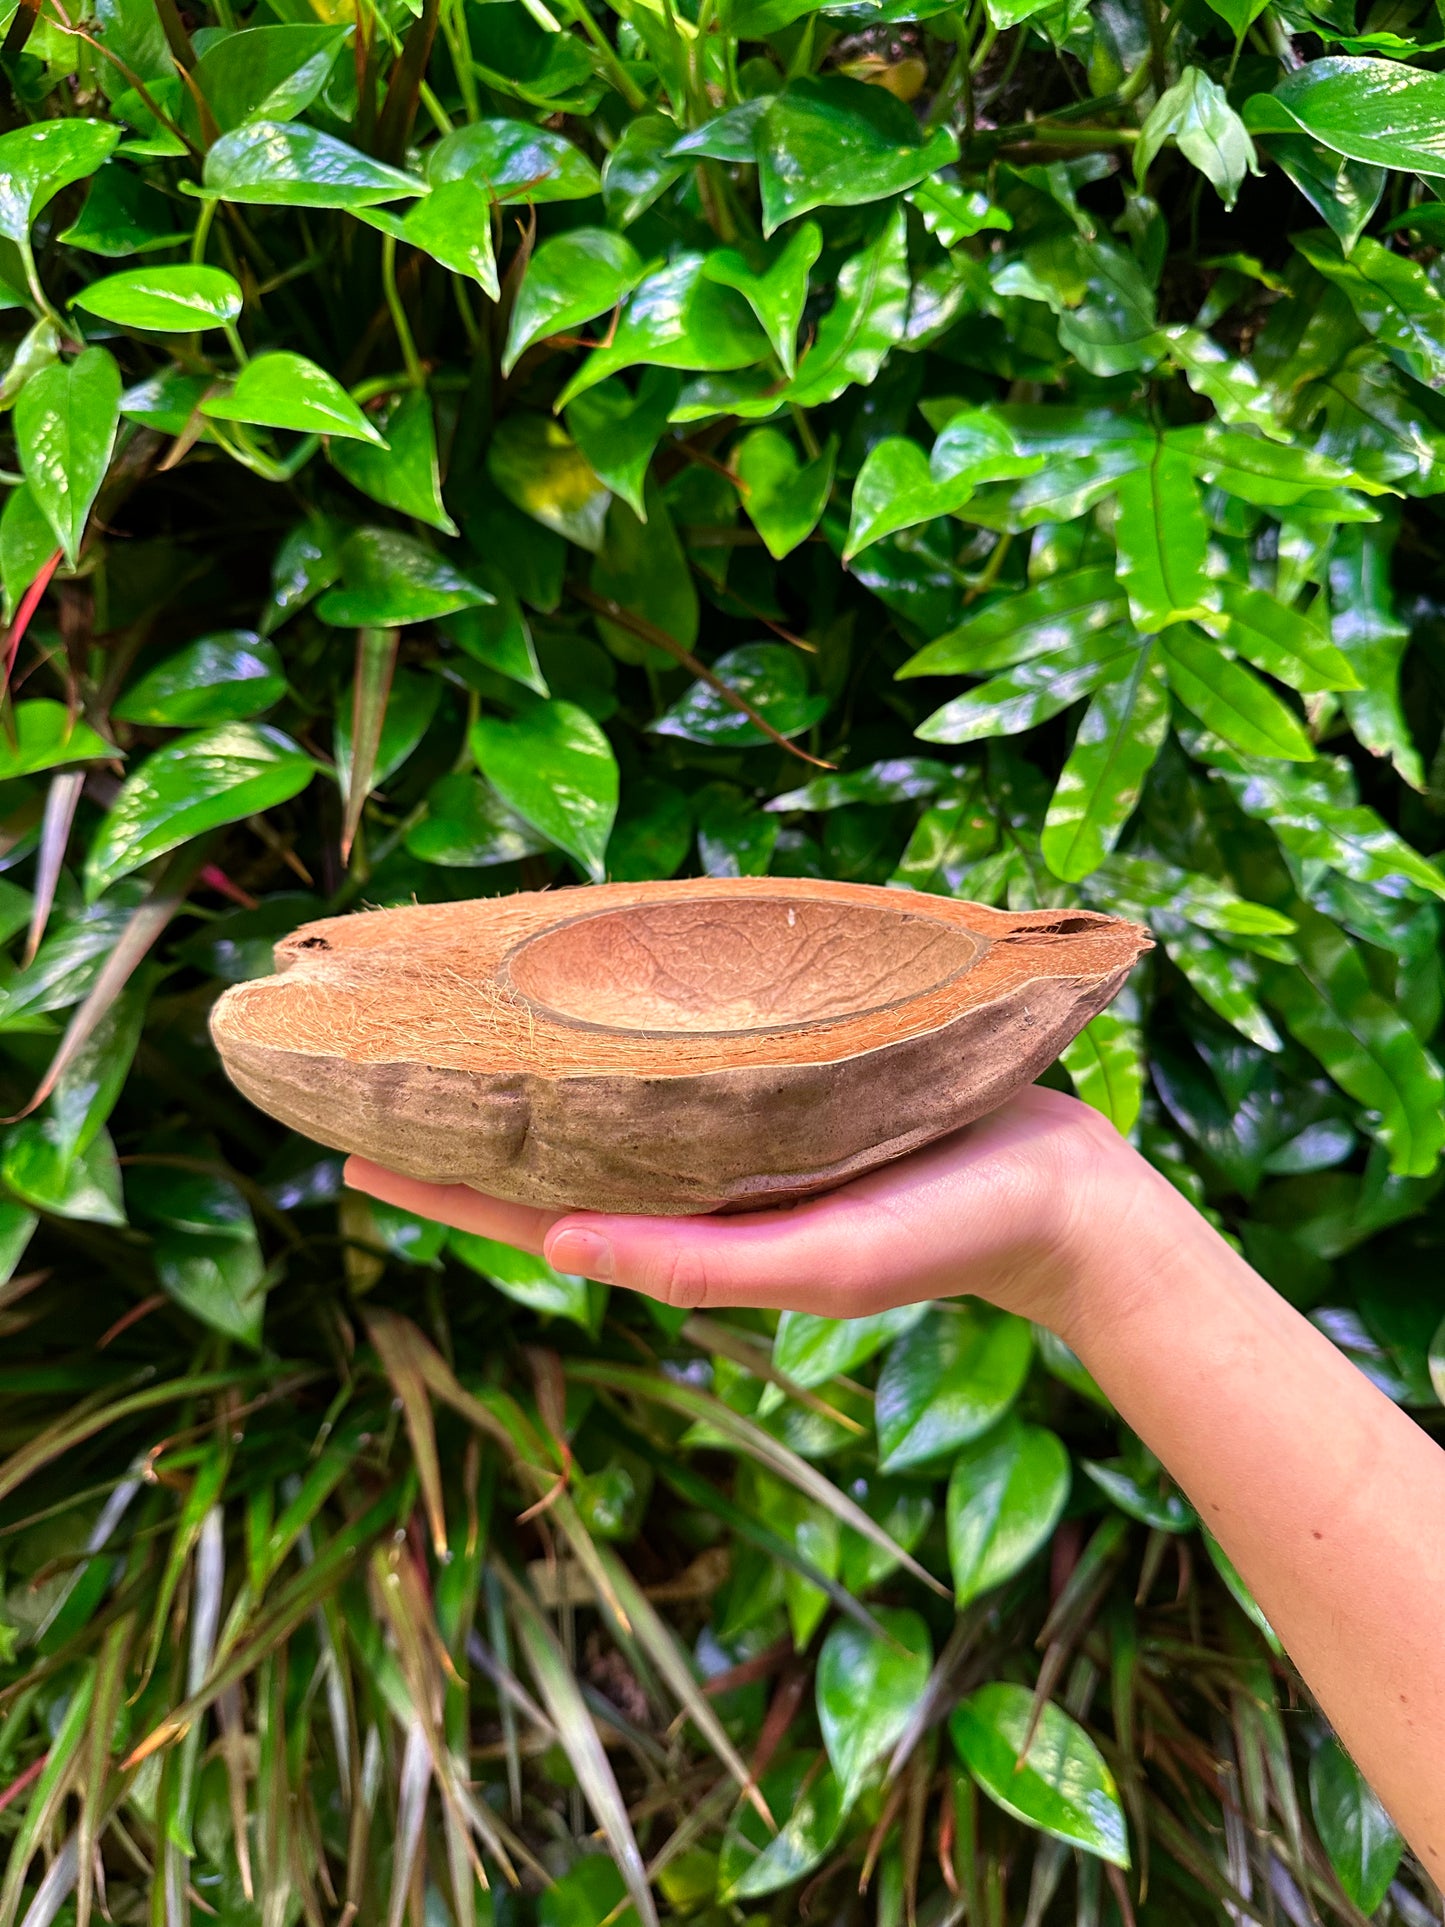 coco husk bowl half with hand